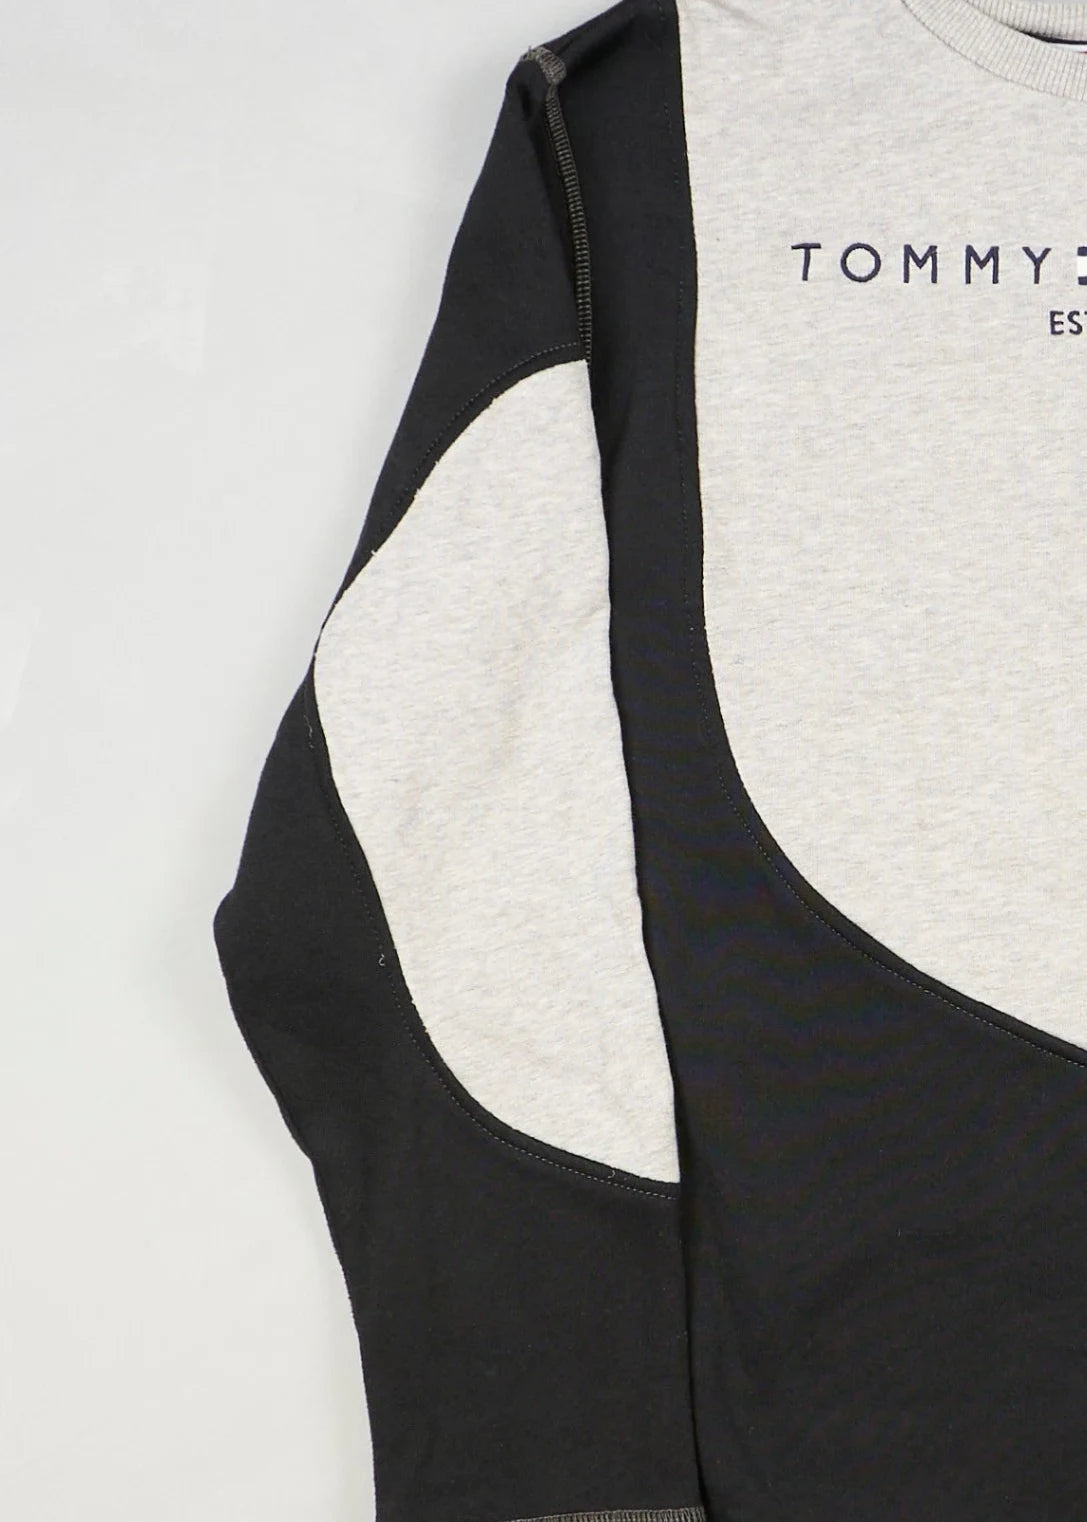 Tommy Hilfiger - Sweatshirt (M) Left